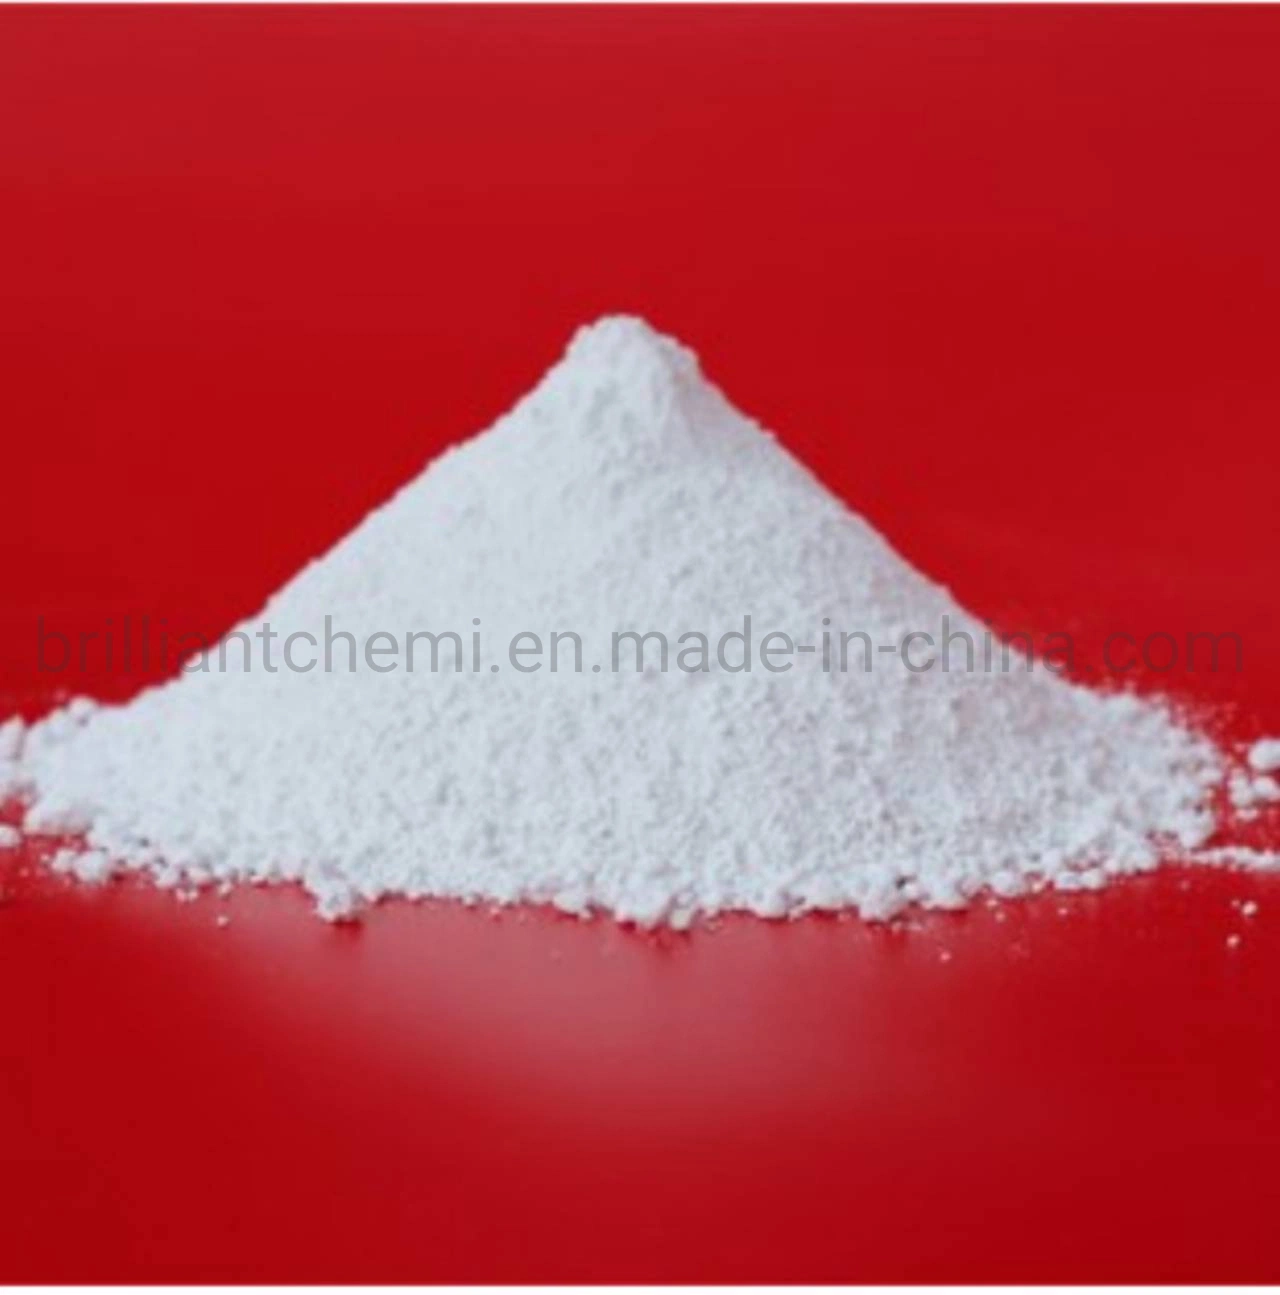 China Supplier Inorganic Chemicals Baso4 Barium Sulfate for Oil Drilling/Ceramic